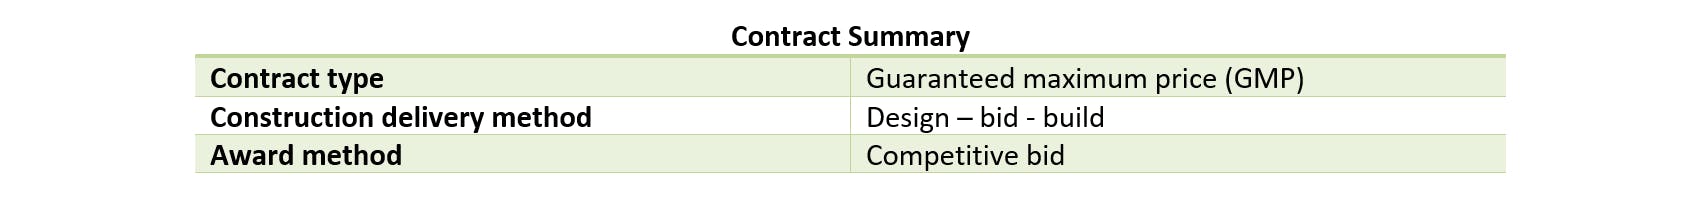 Contract summary